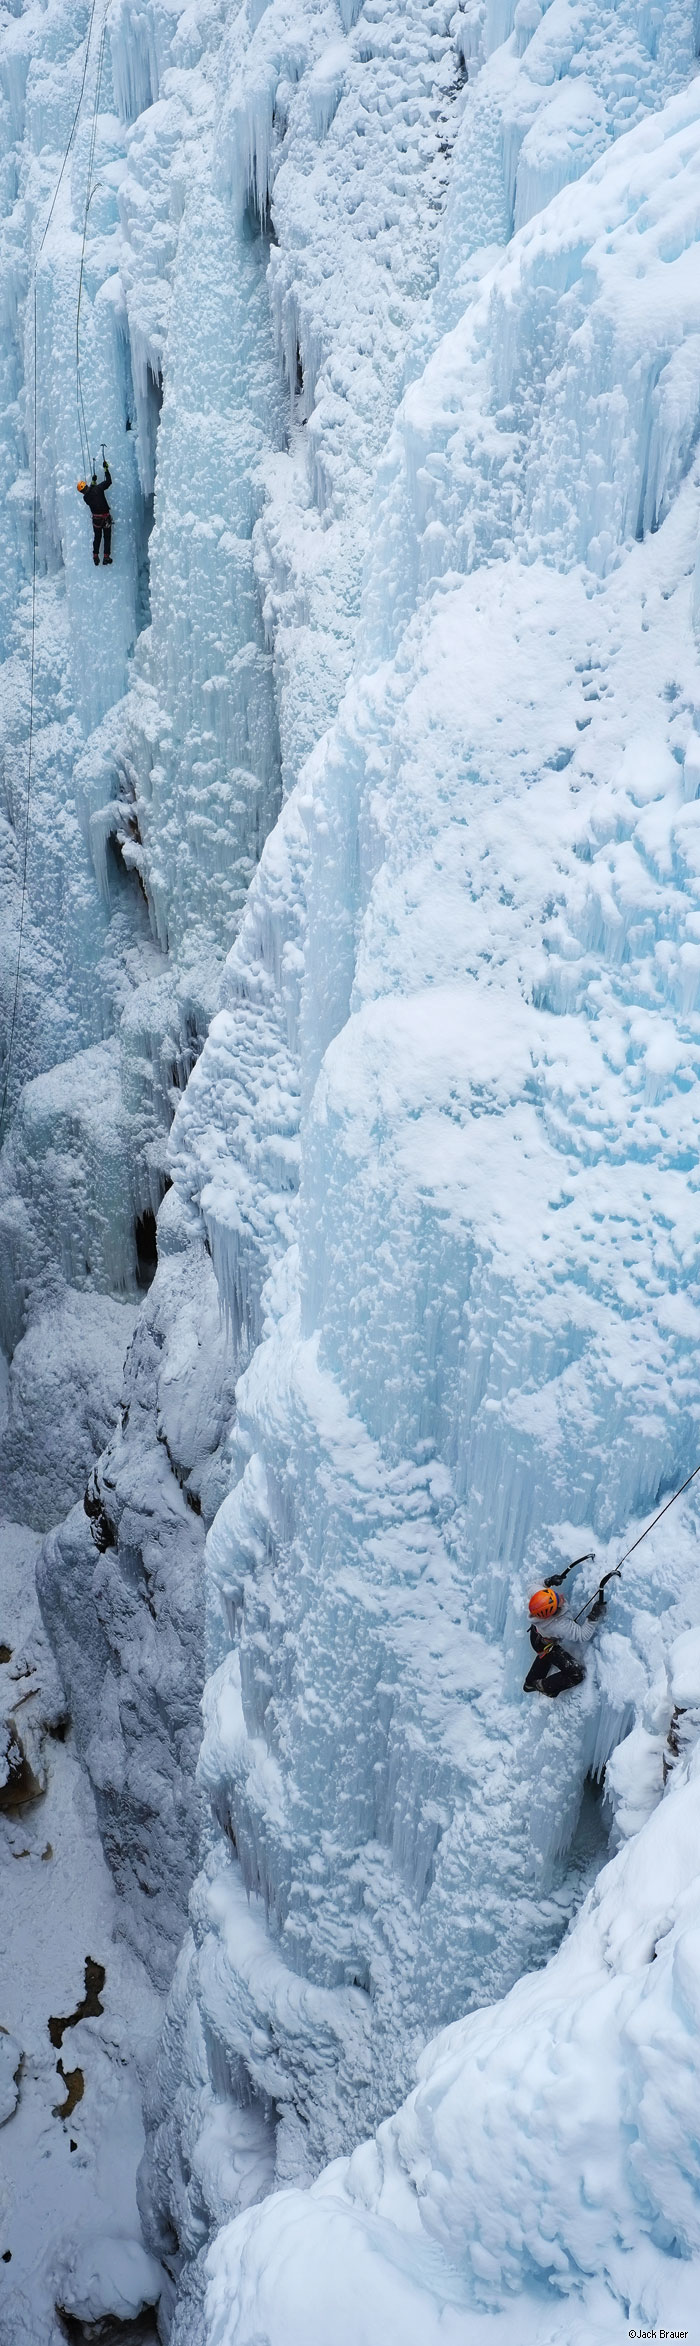 Ouray Ice Park climbers, Colorado